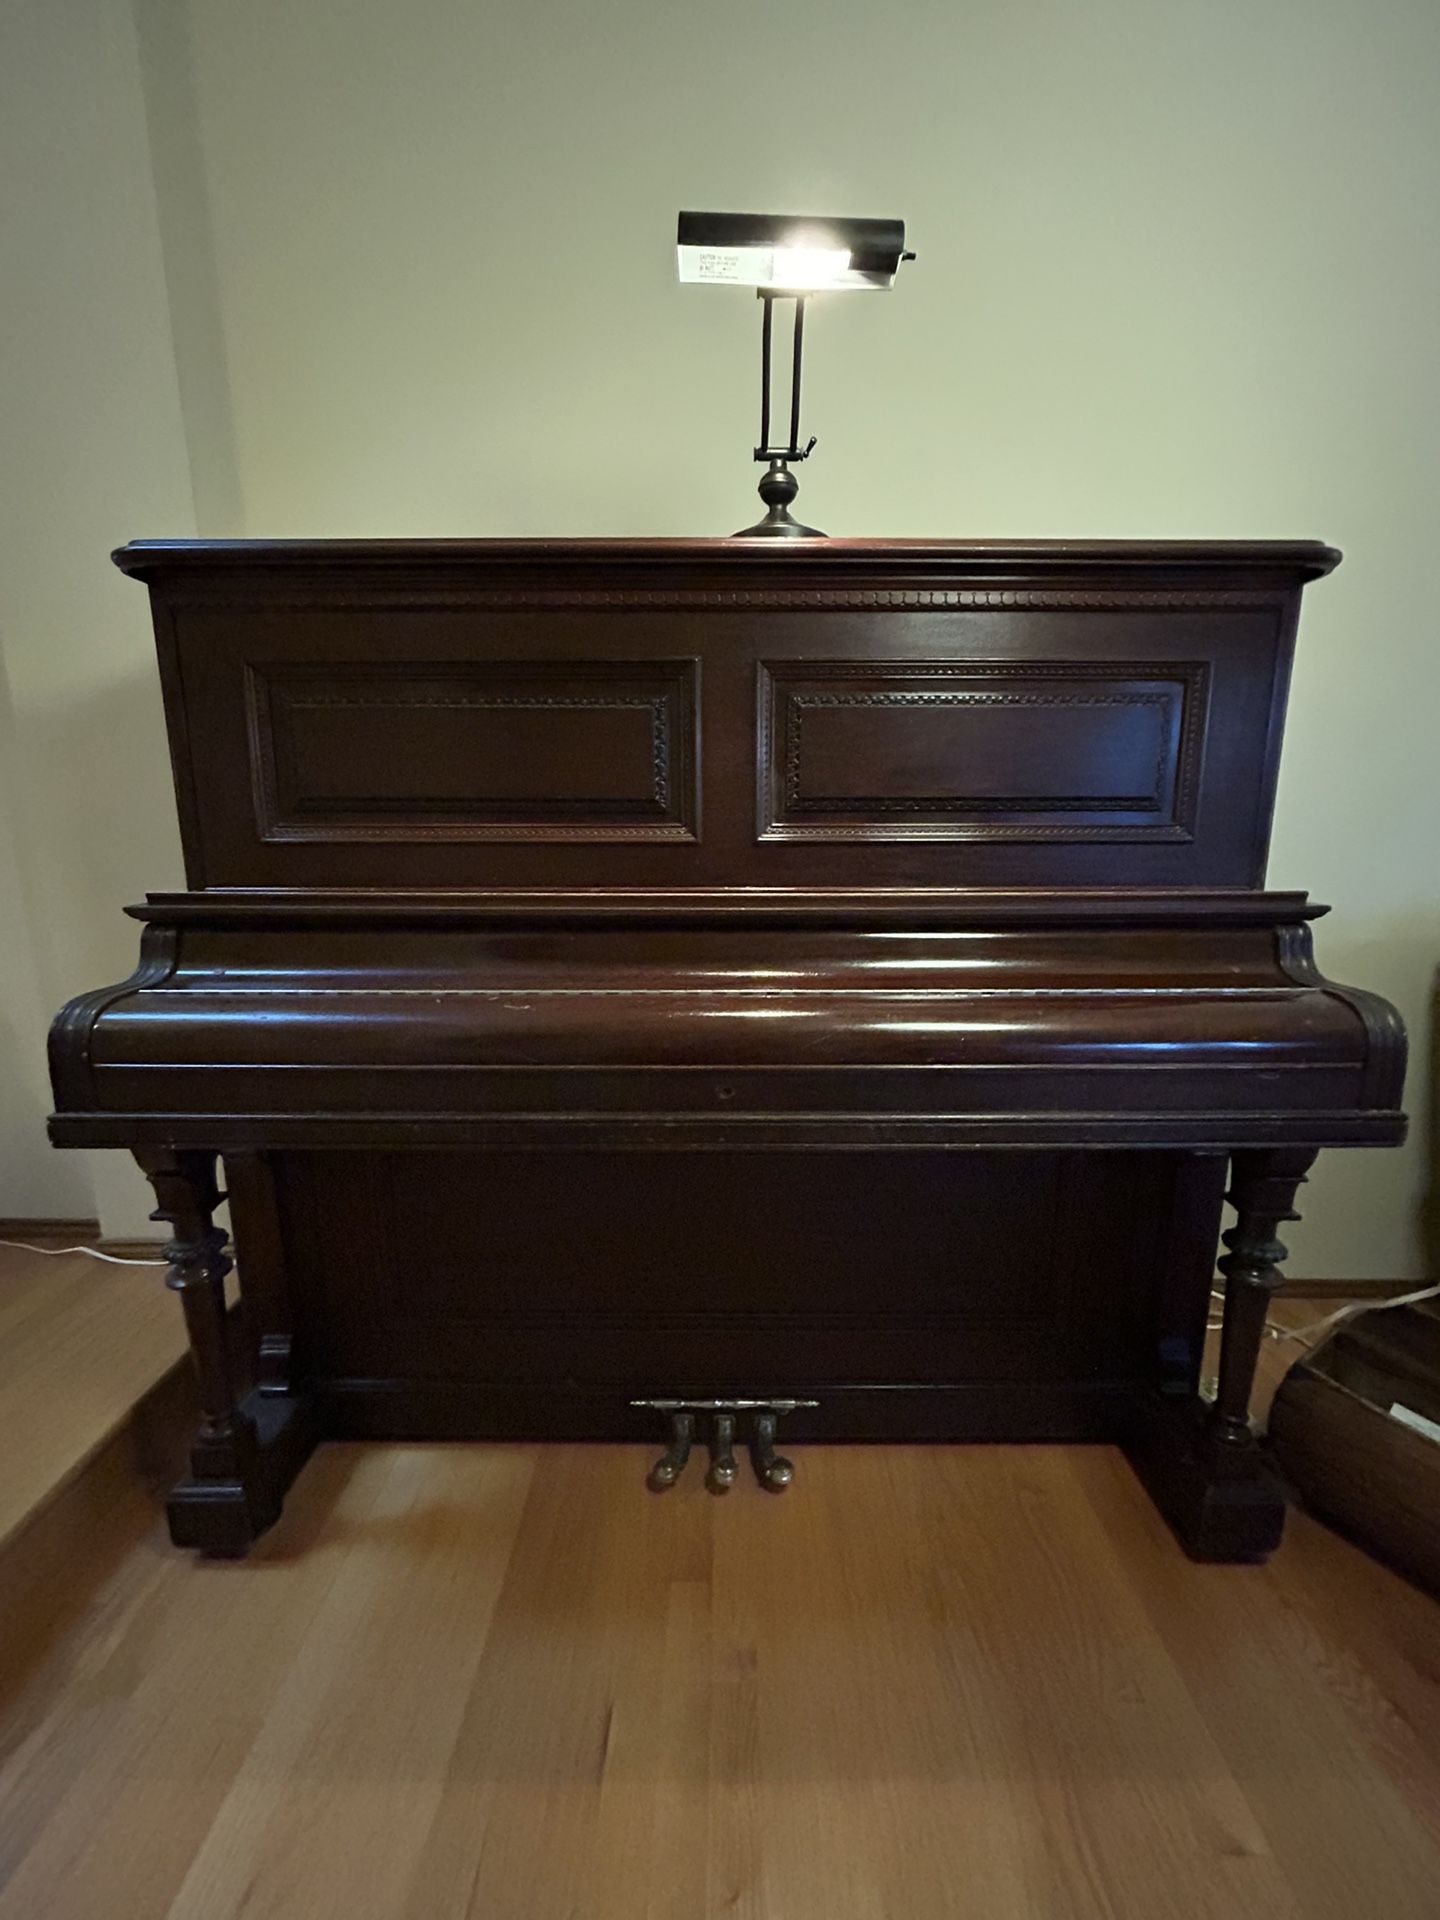 Ivers & Pond Antique Piano 